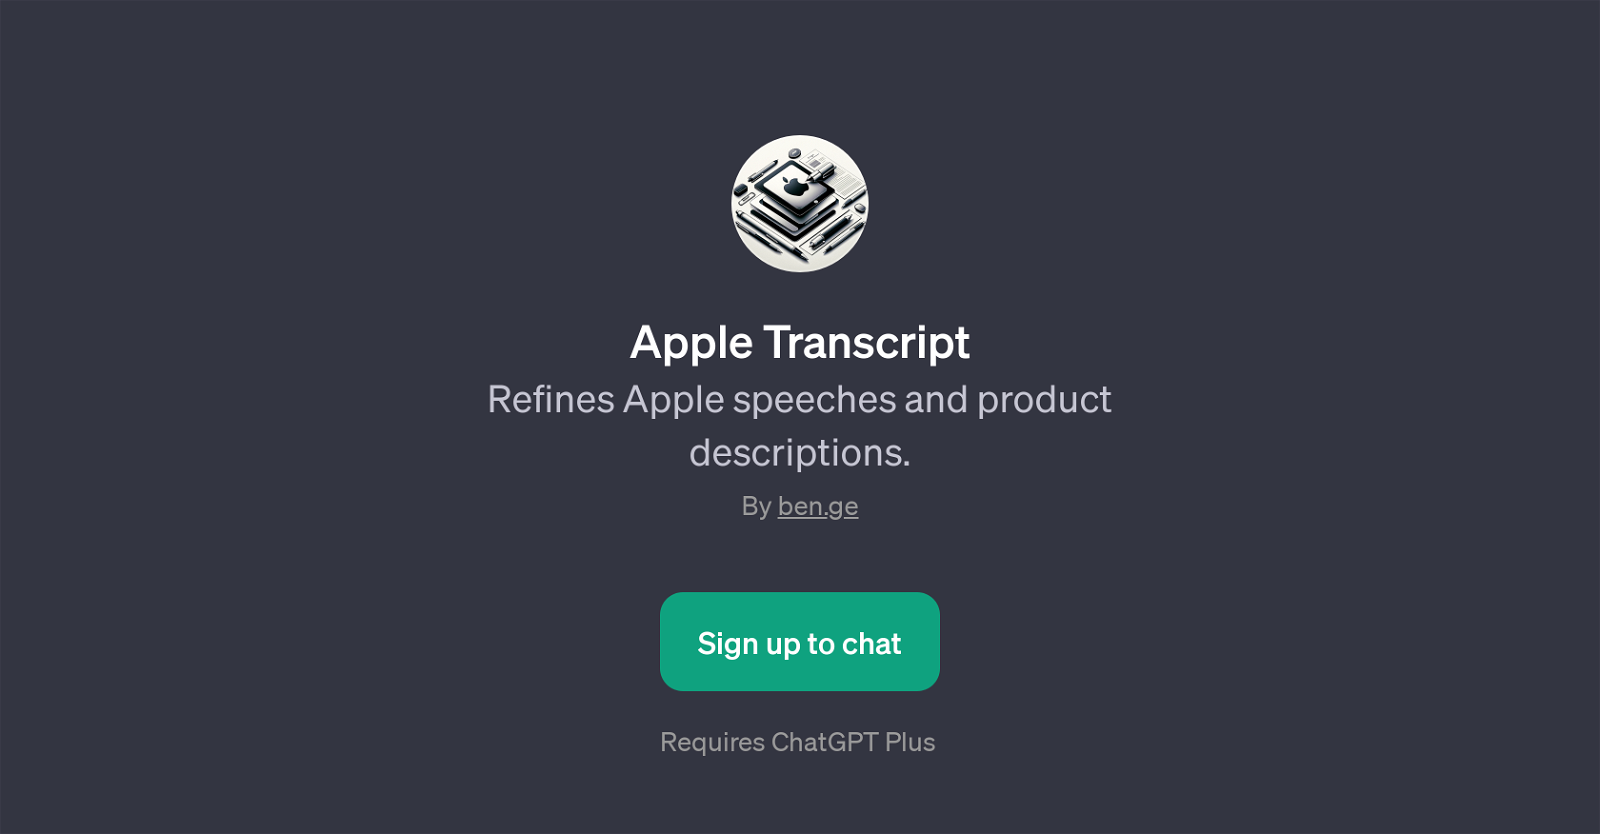 Apple Transcript website